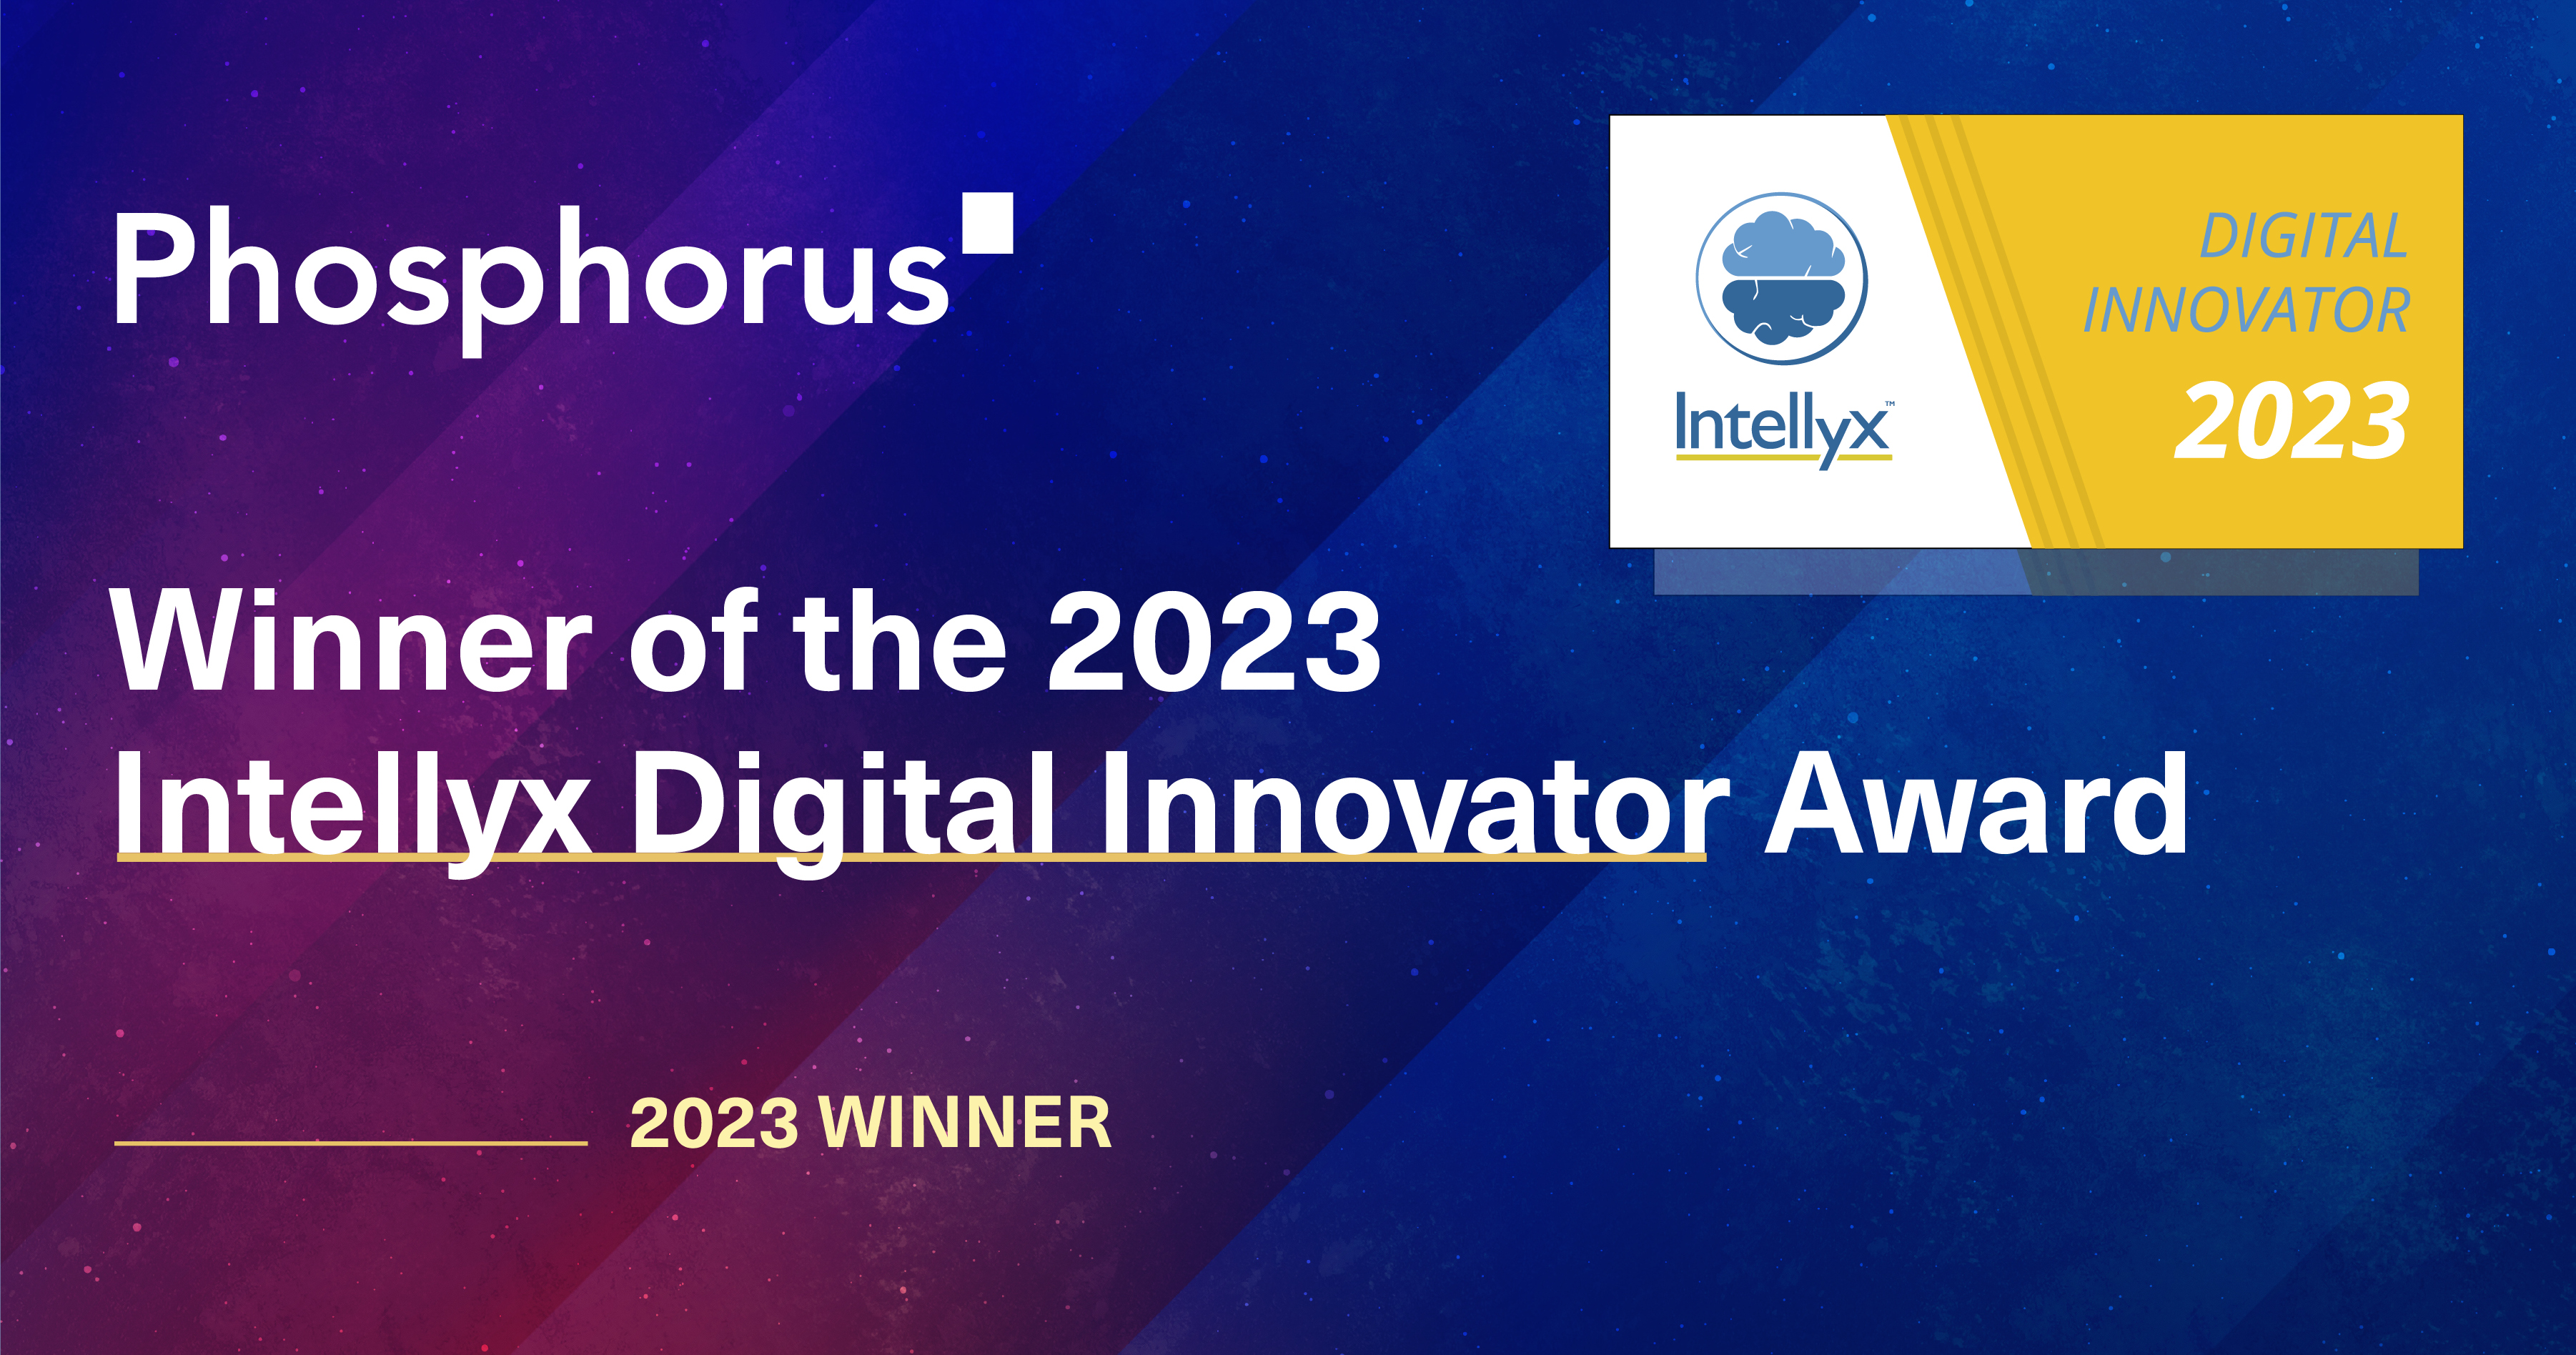 2023-Digital-Innovator-Award@2x